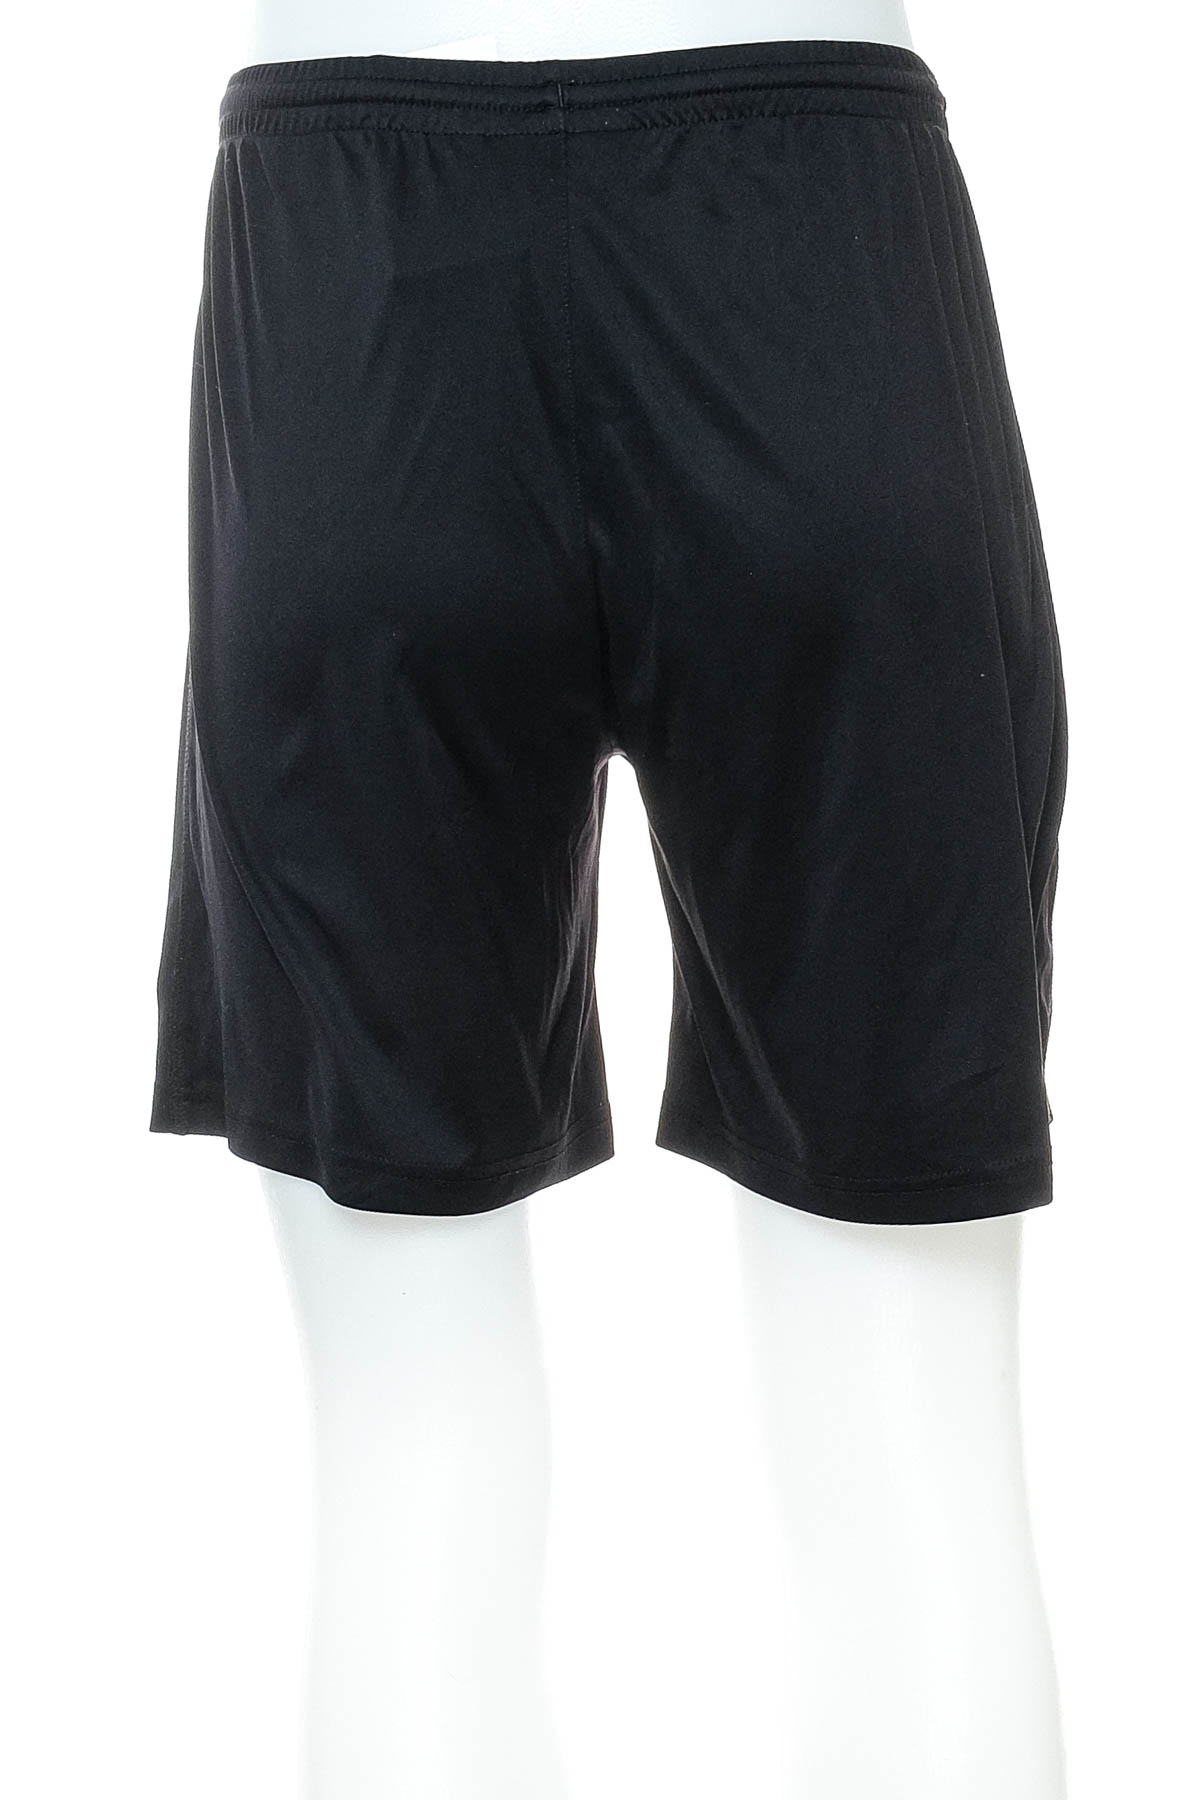 Shorts for boys - Lotto - 1